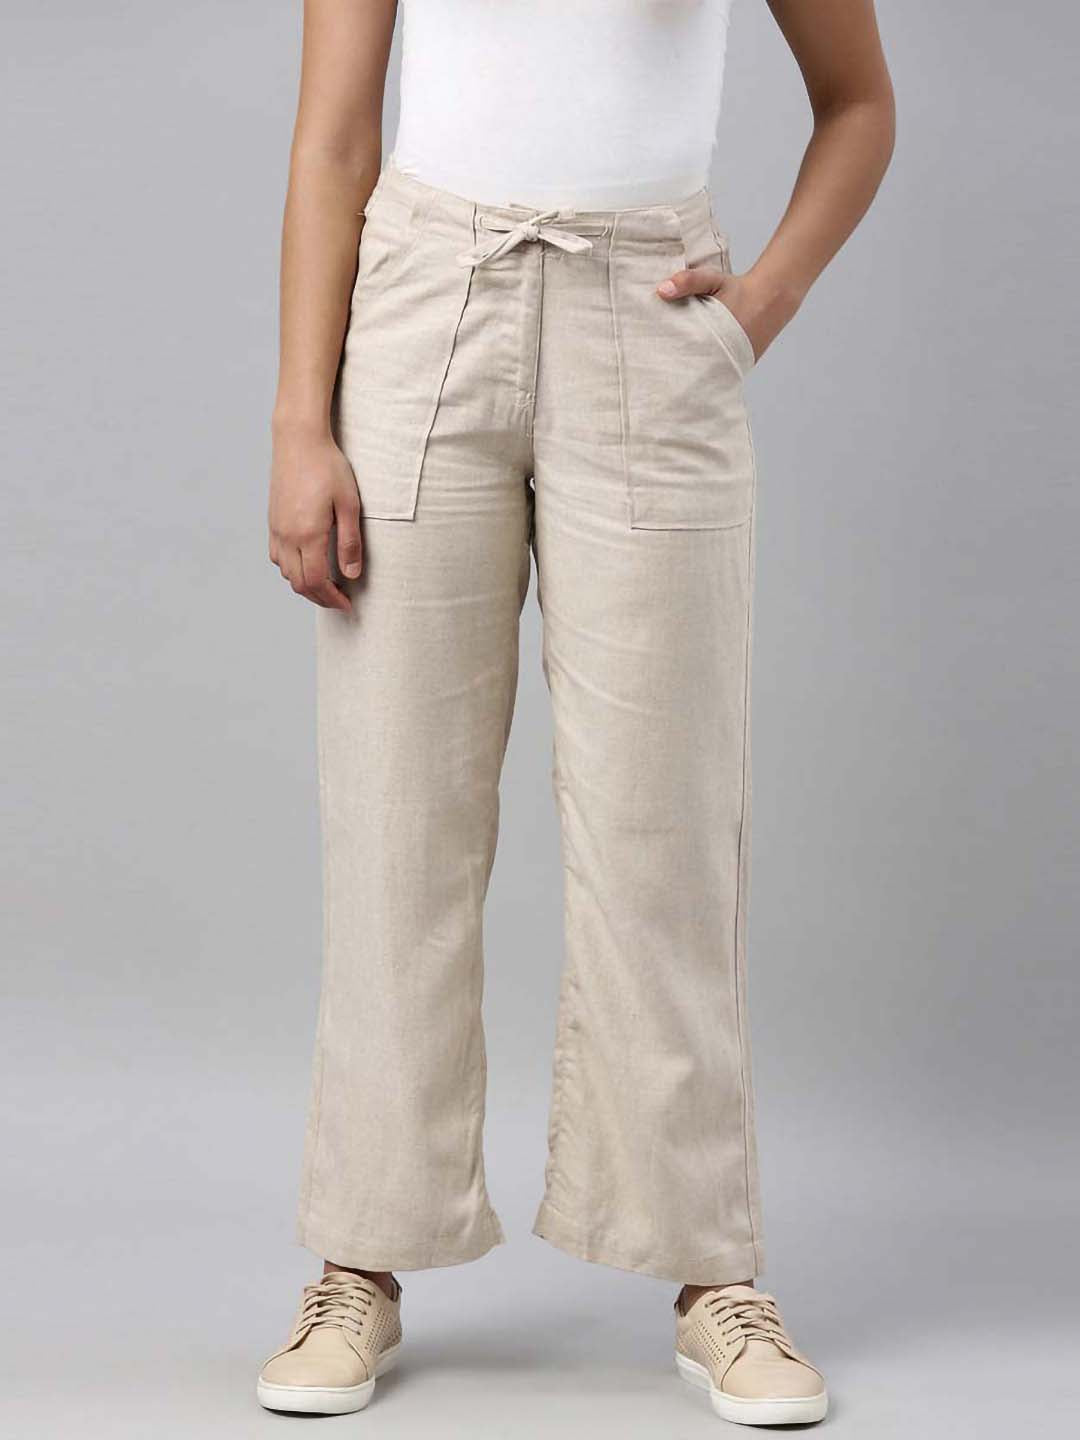 Buy Cream Pants for Women by GO COLORS Online  Ajiocom